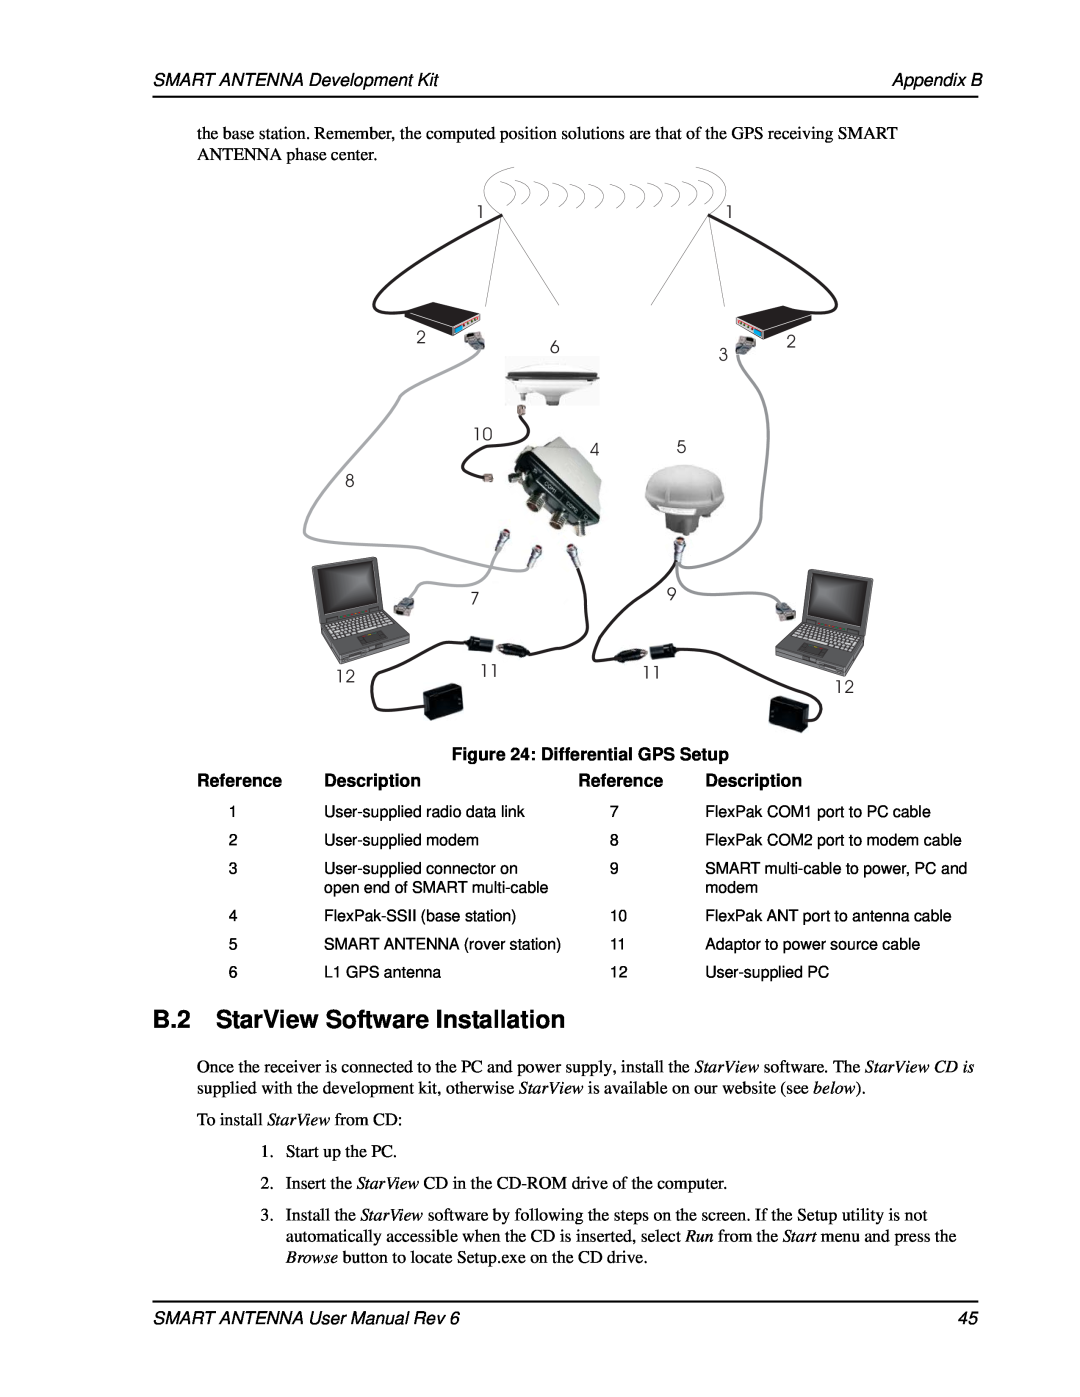 Novatel SMART ANTENNA user manual B.2 StarView Software Installation, Differential GPS Setup, Description, Reference 